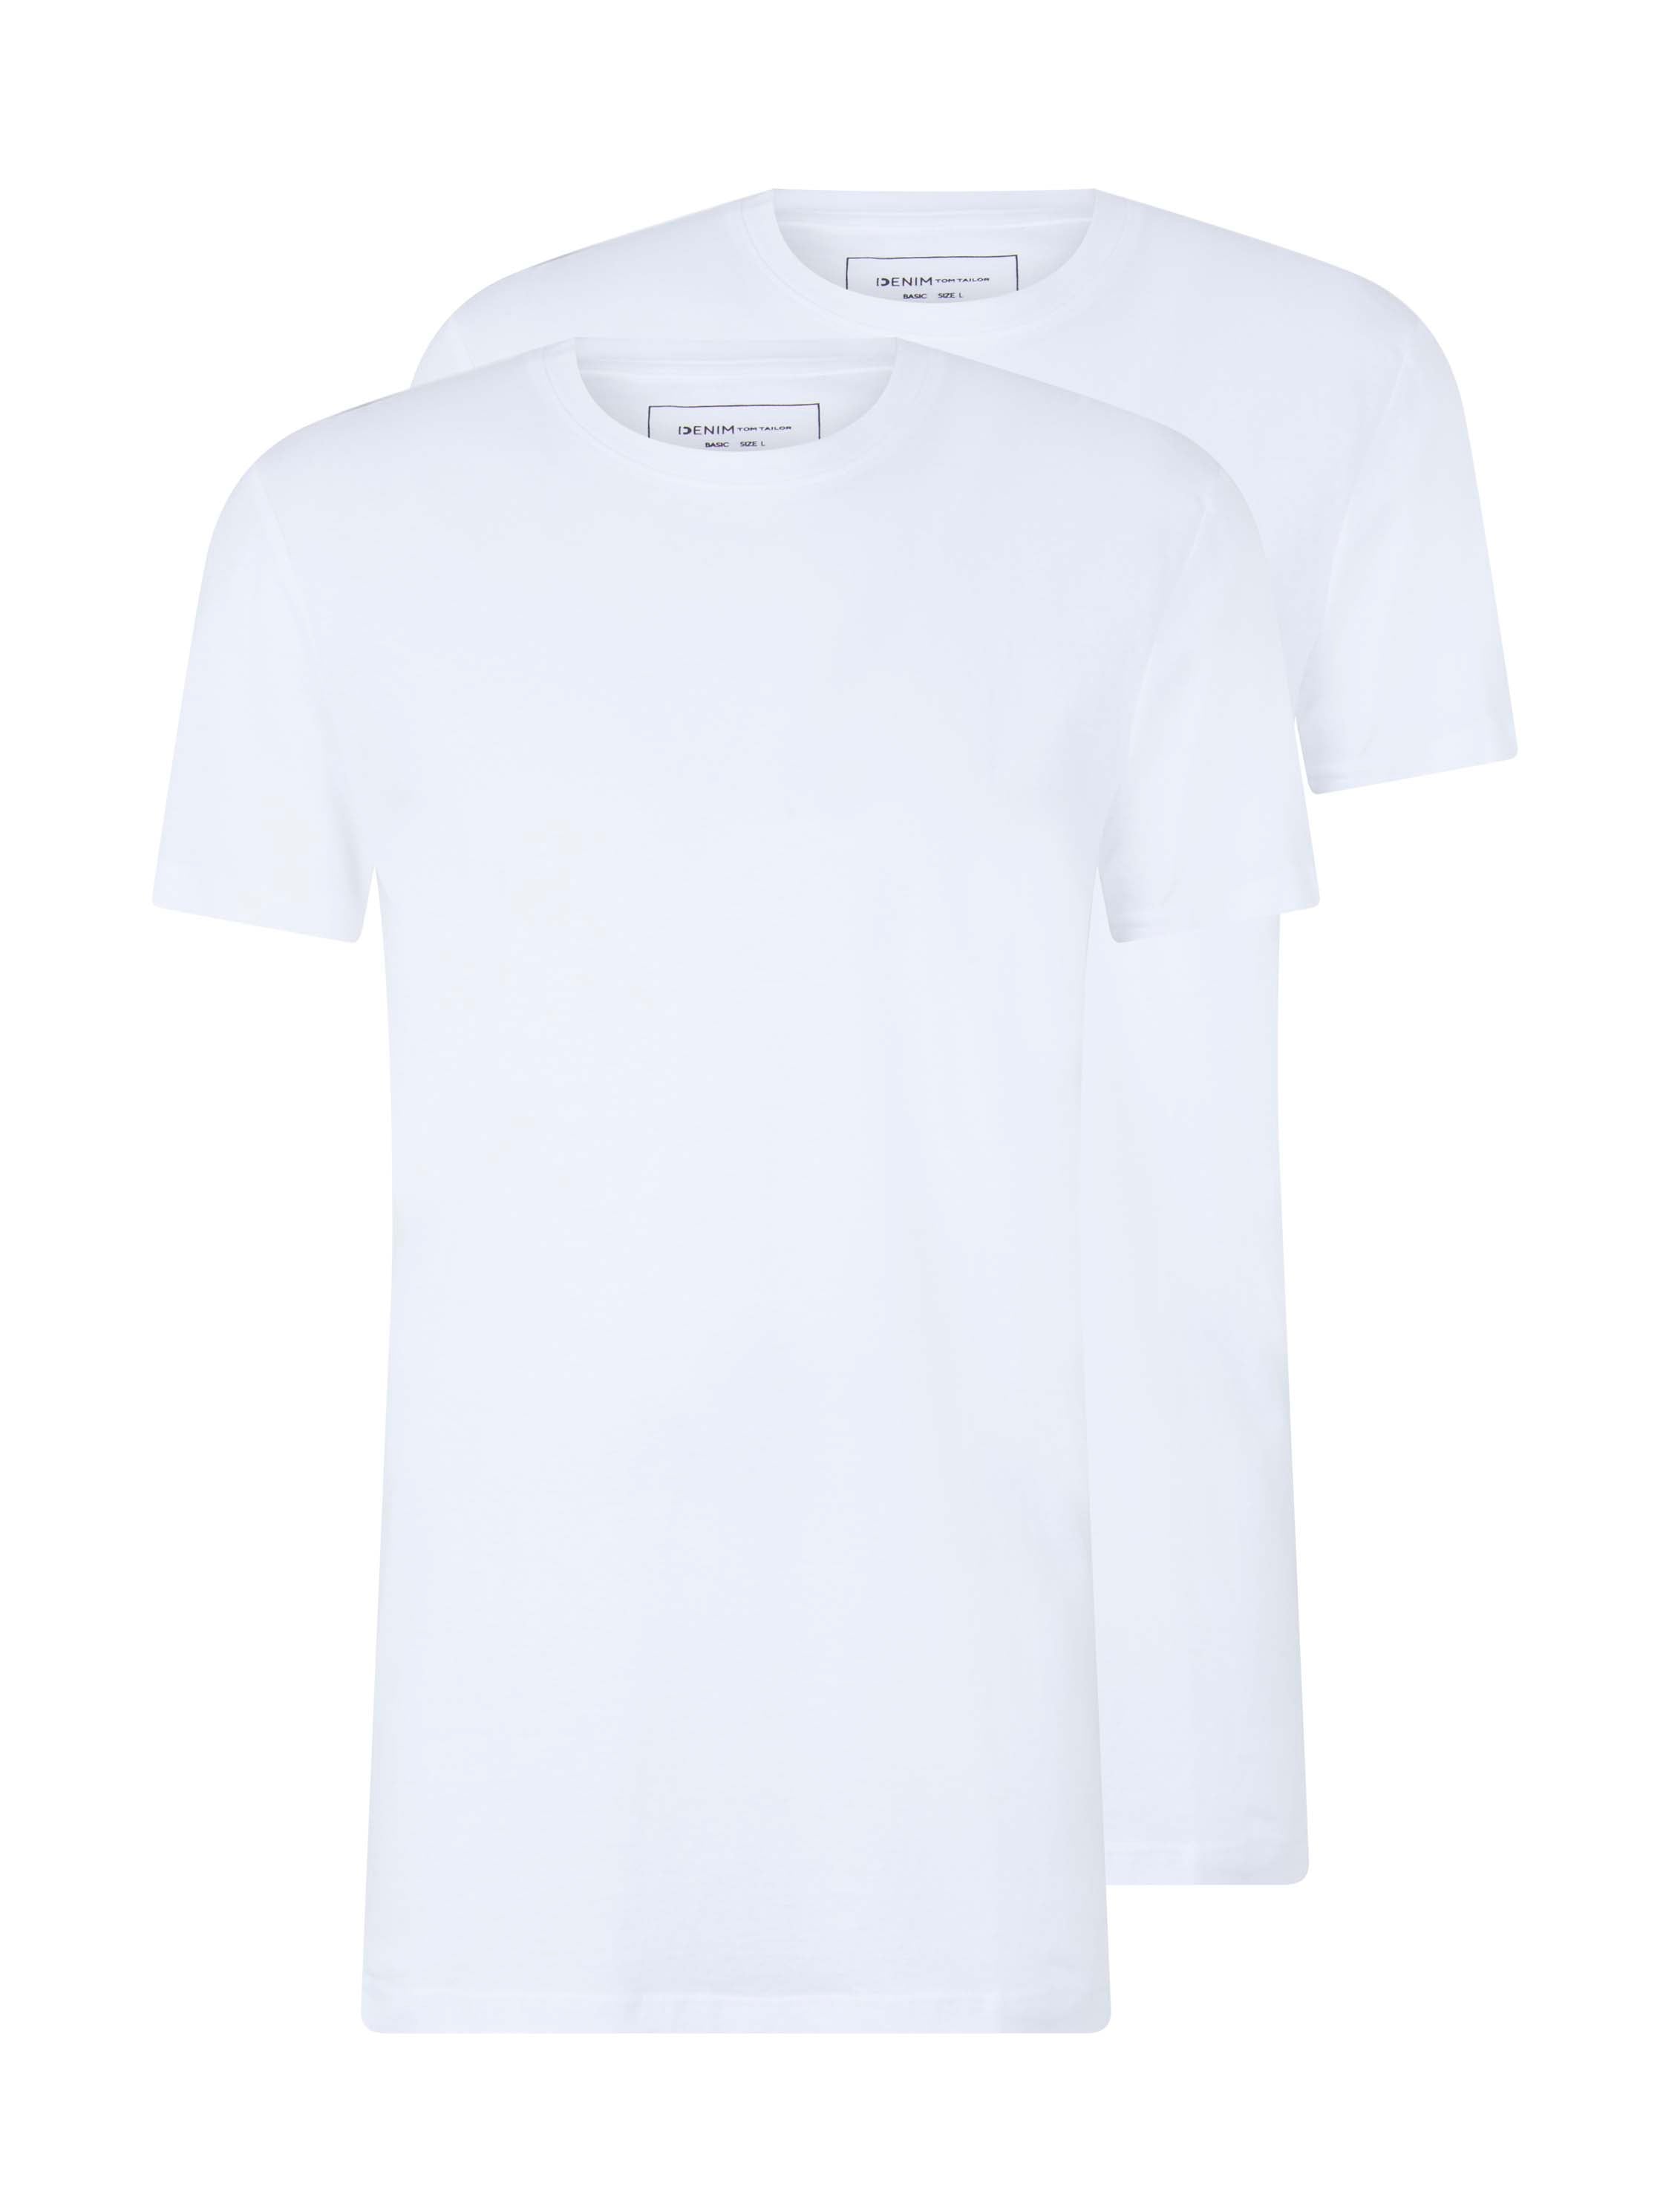 Goza Cotton A-Shirt Undershirt Tank Tops for Men (3 Pack)